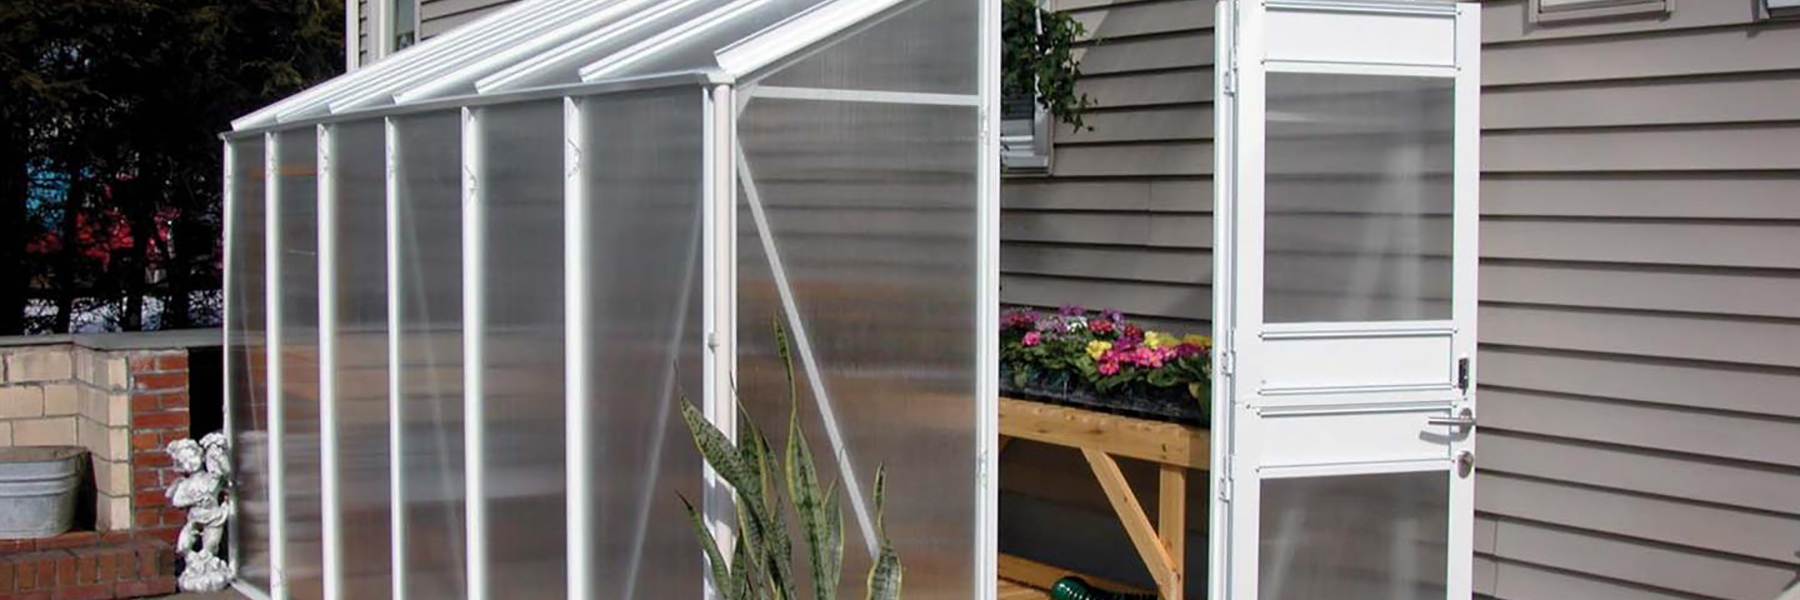 urban greenhouse kit